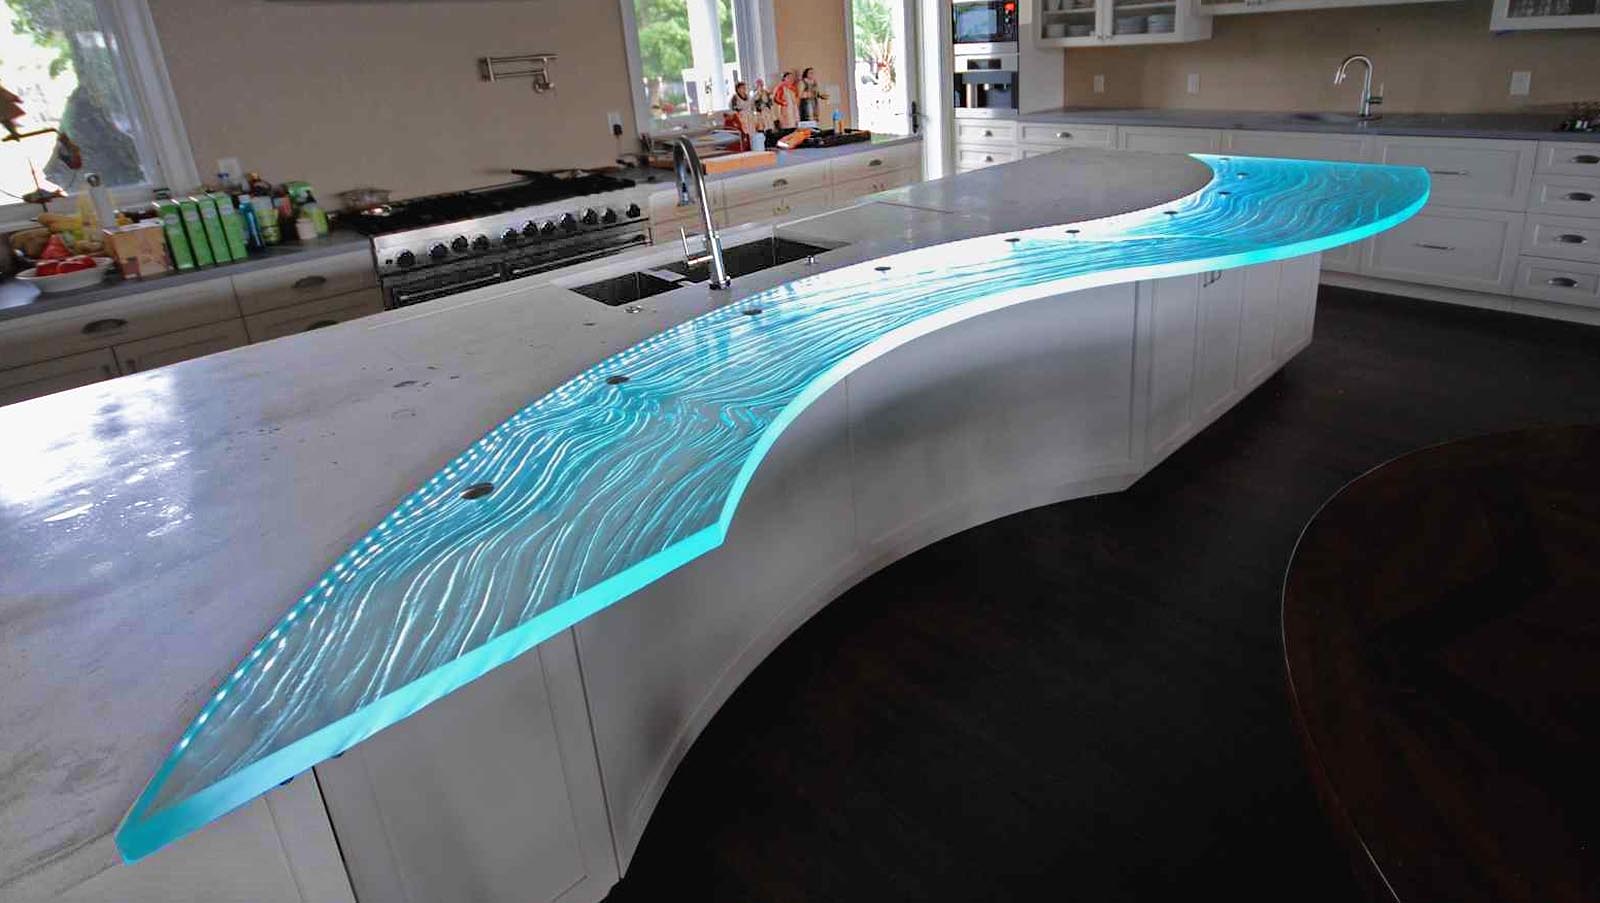 Recycled materials make countertops visually vibrant, eco-friendly -  Deseret News